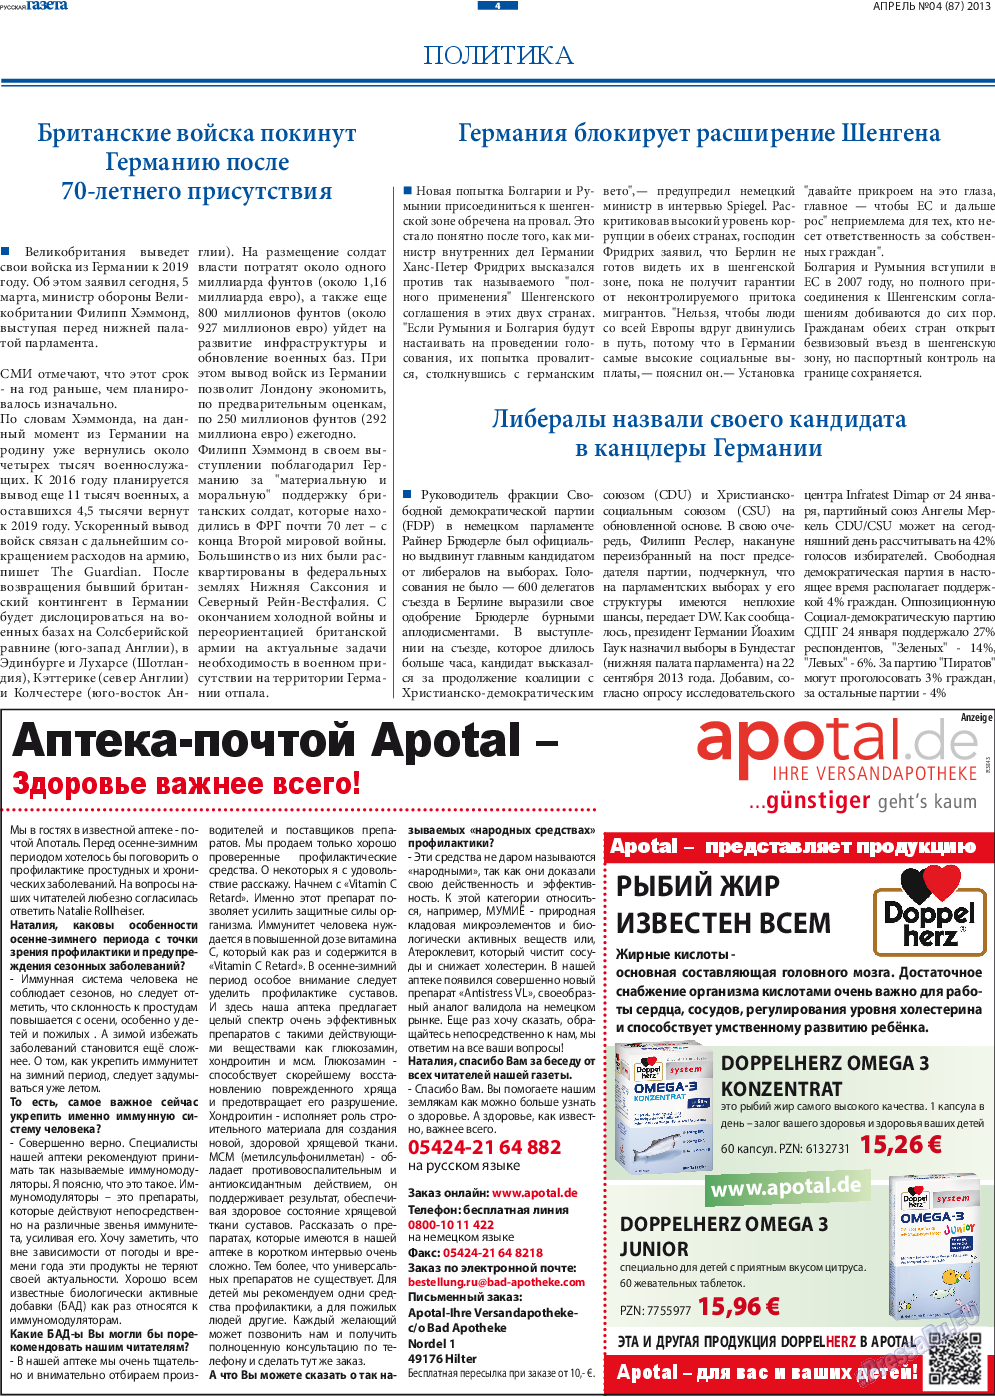 Русская Газета, газета. 2013 №4 стр.4